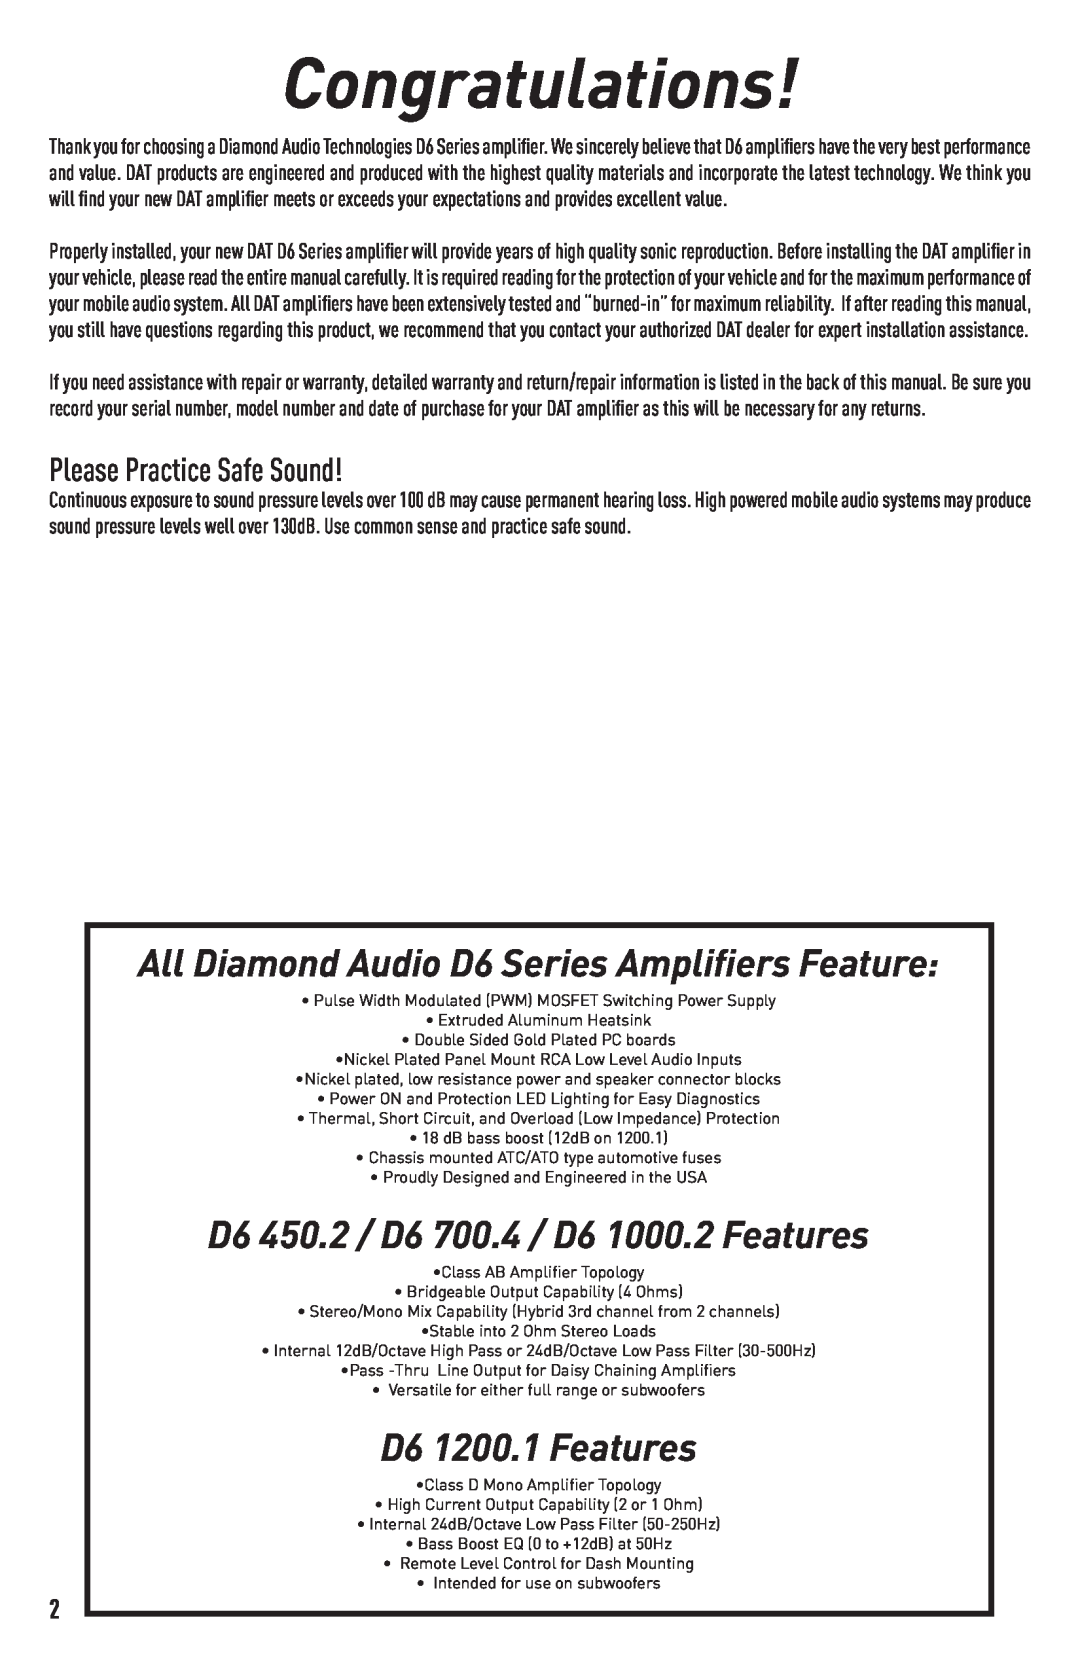 Diamond Audio Technology D6 700.4 Congratulations, All Diamond Audio D6 Series Amplifiers Feature, D6 1200.1 Features 